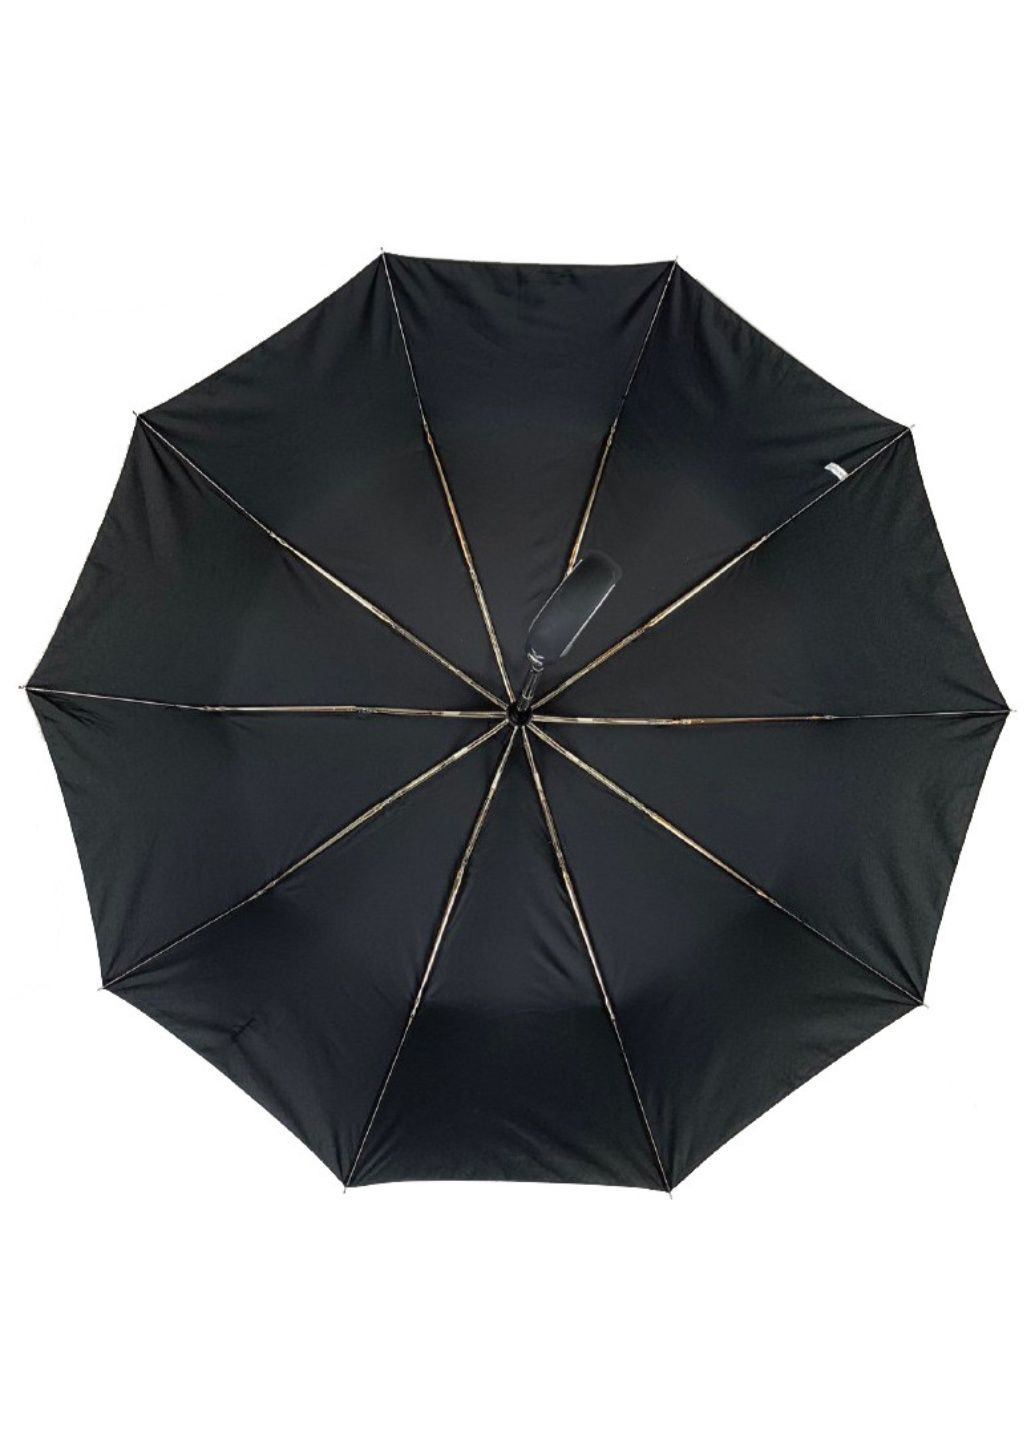 Зонт полный автомат мужской 104 см Silver Rain (195705562)